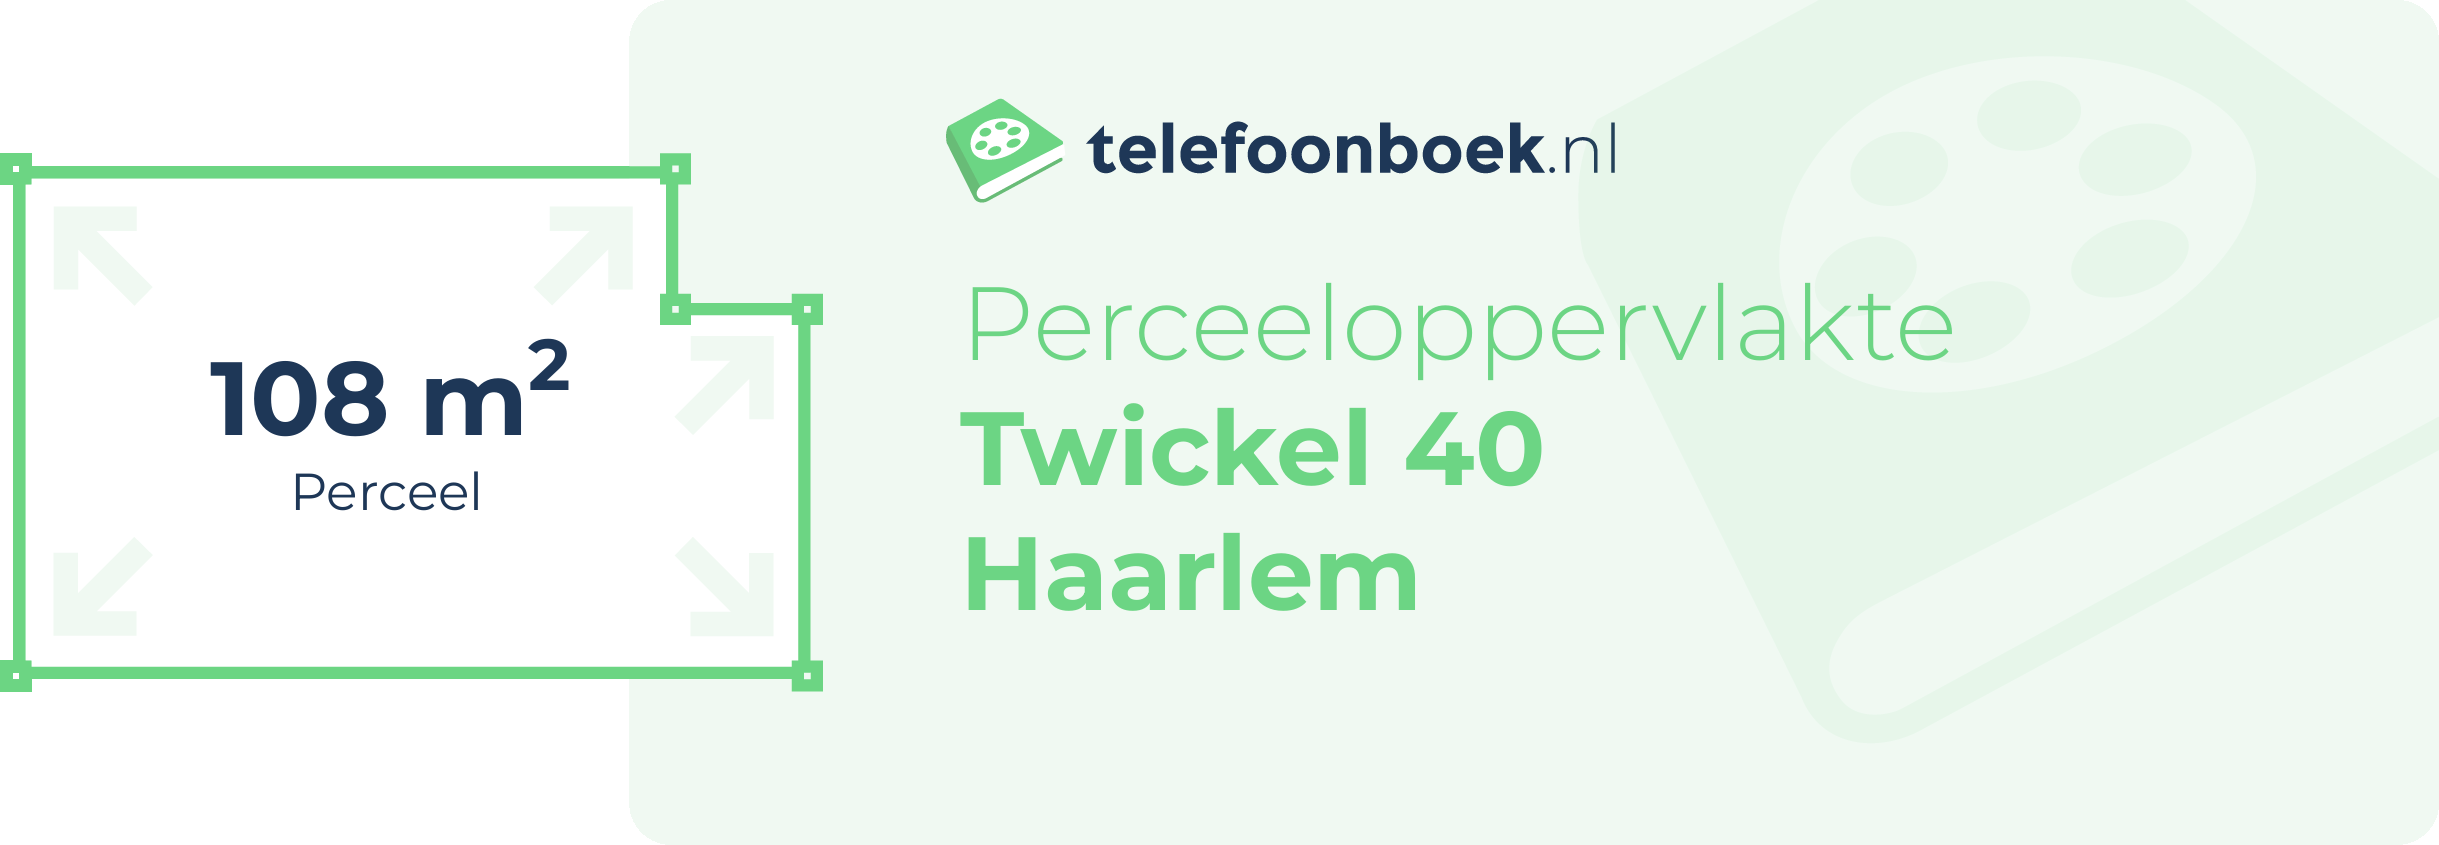 Perceeloppervlakte Twickel 40 Haarlem